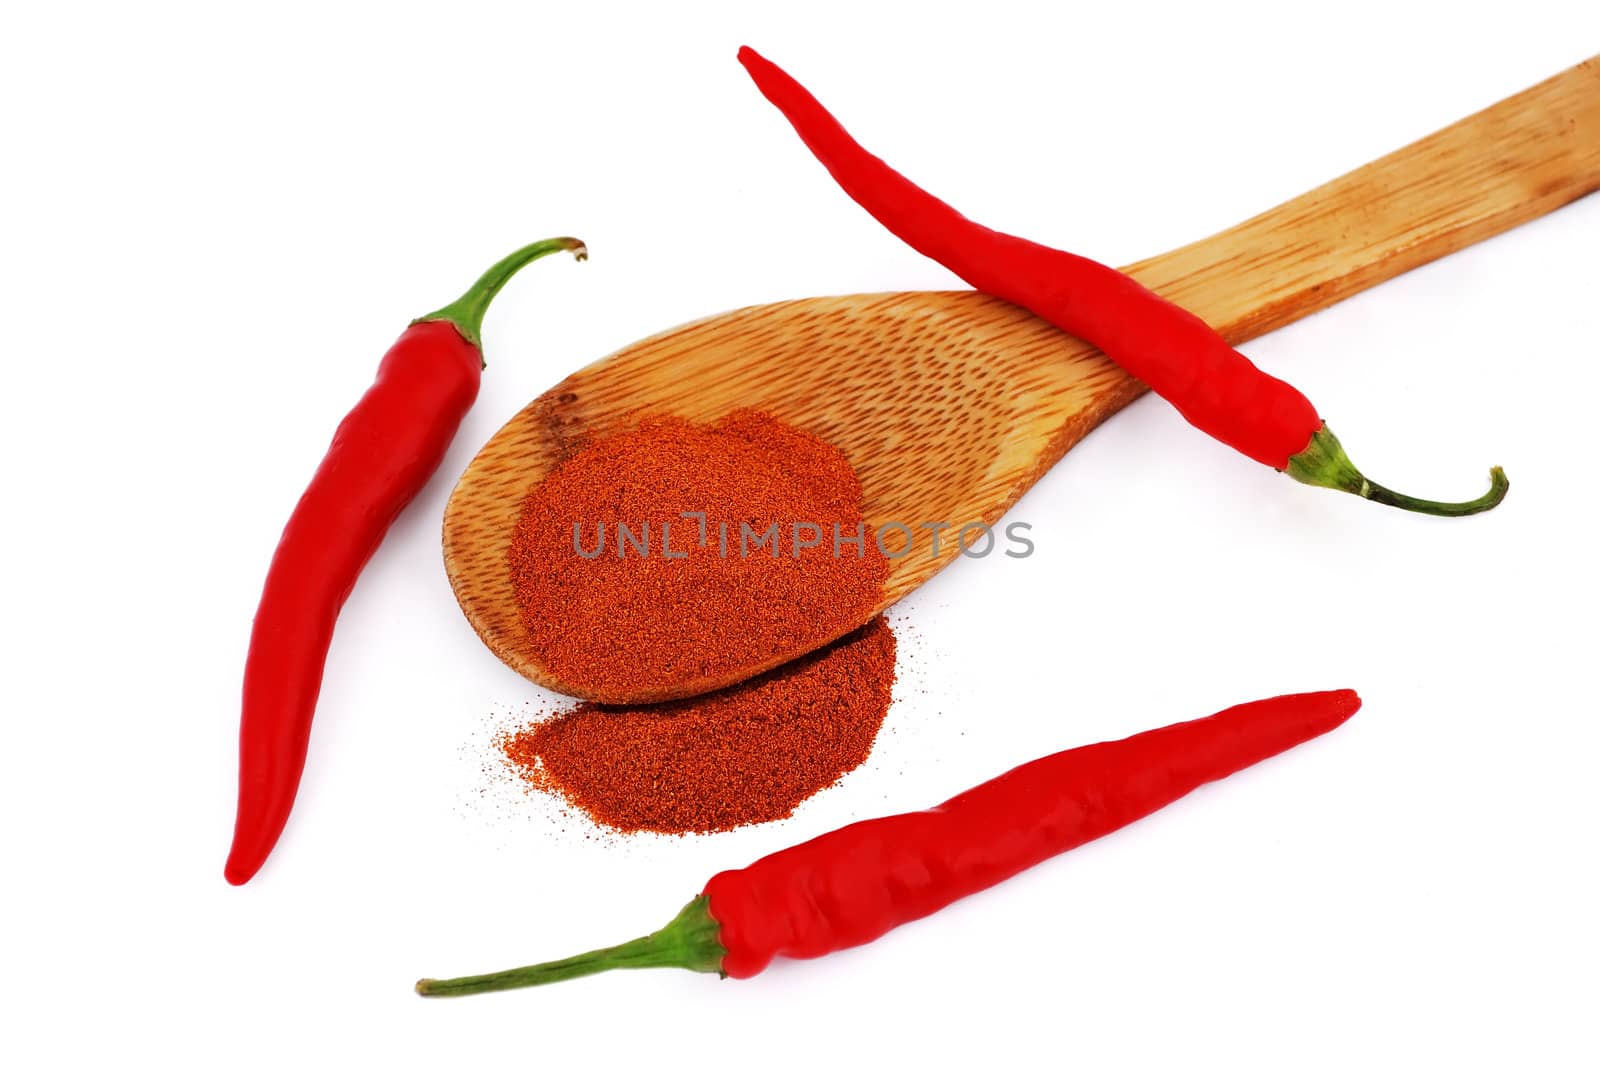 chilli pepper by vetkit